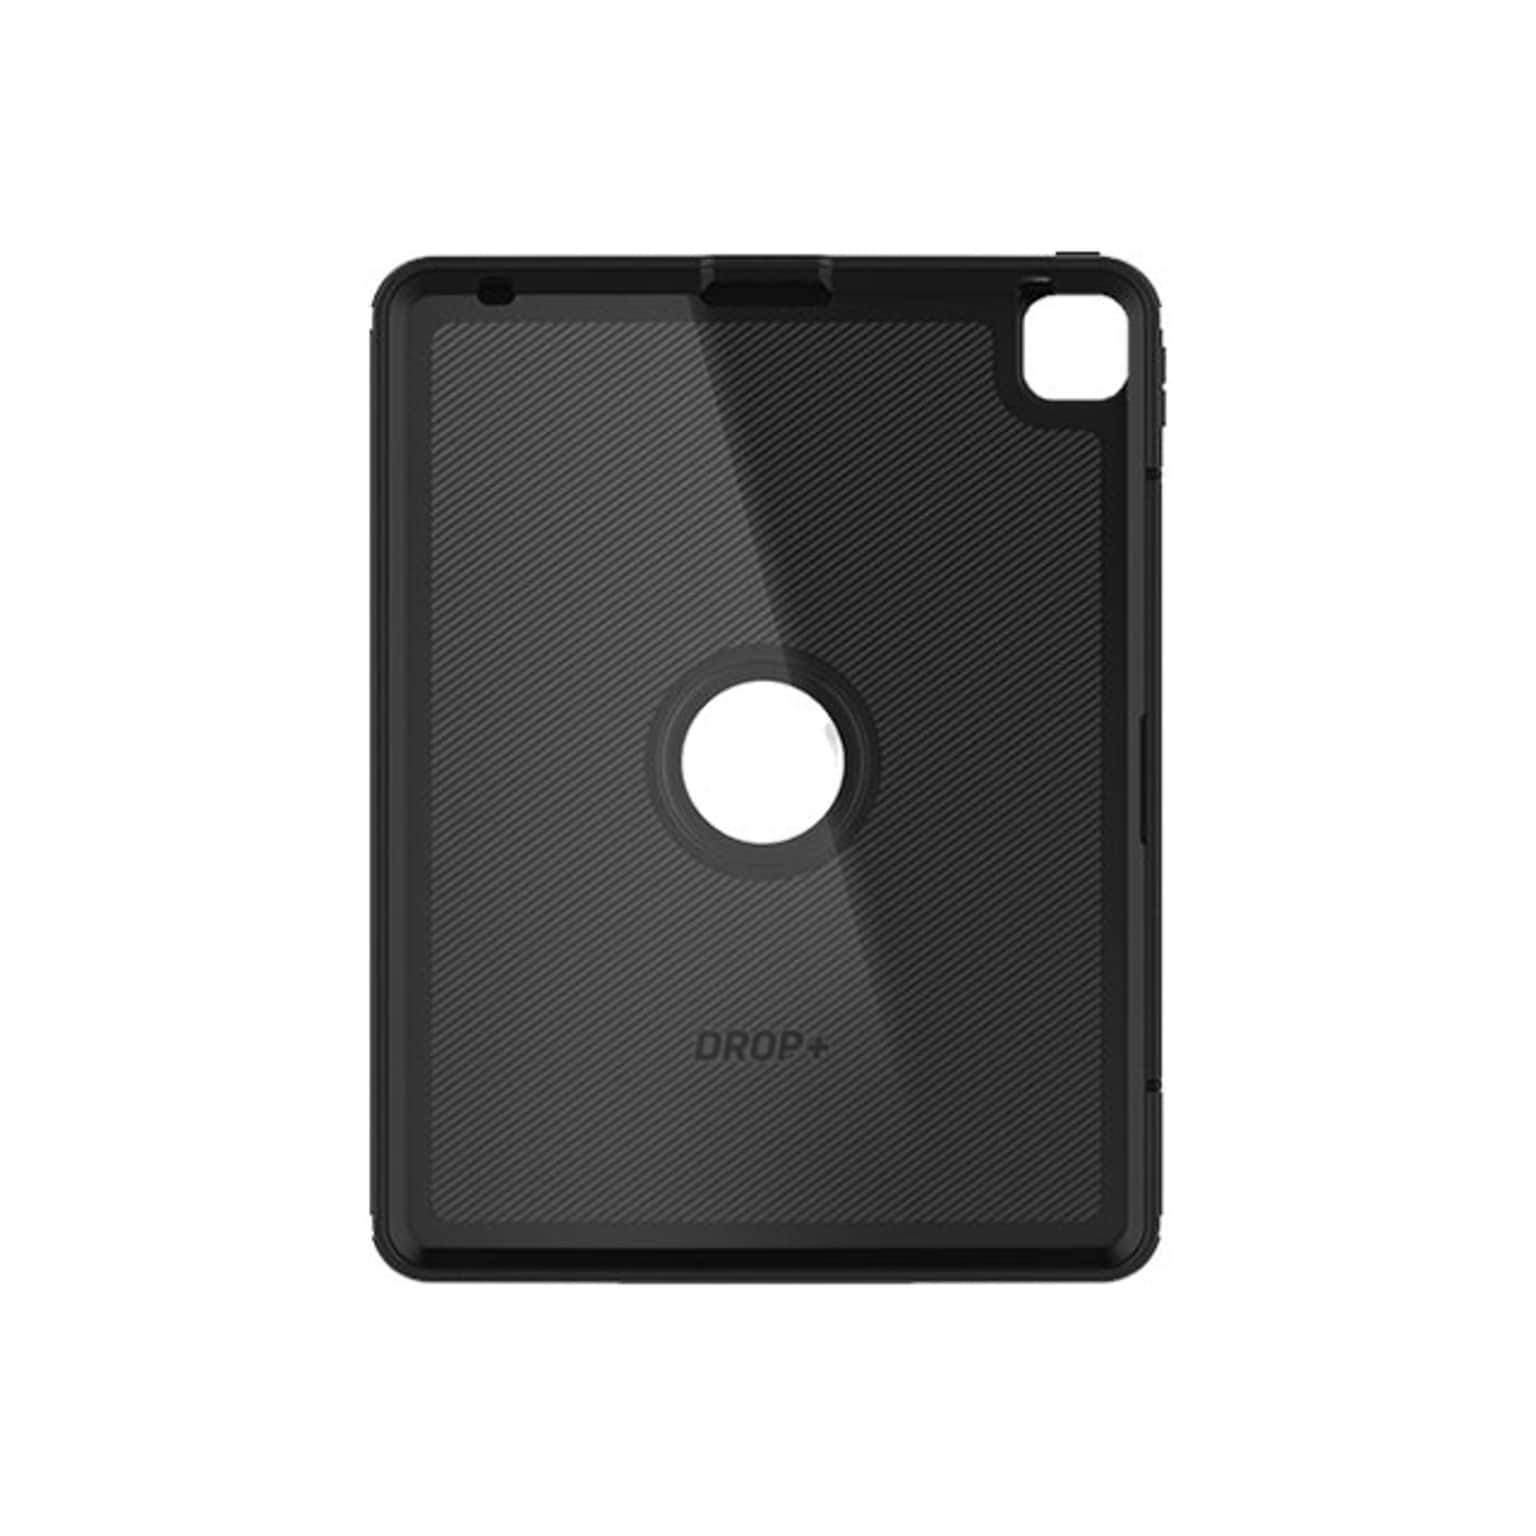 OtterBox Defender Polycarbonate 12.9 Case for iPad Pro 6th Gen, Black (77-83350)